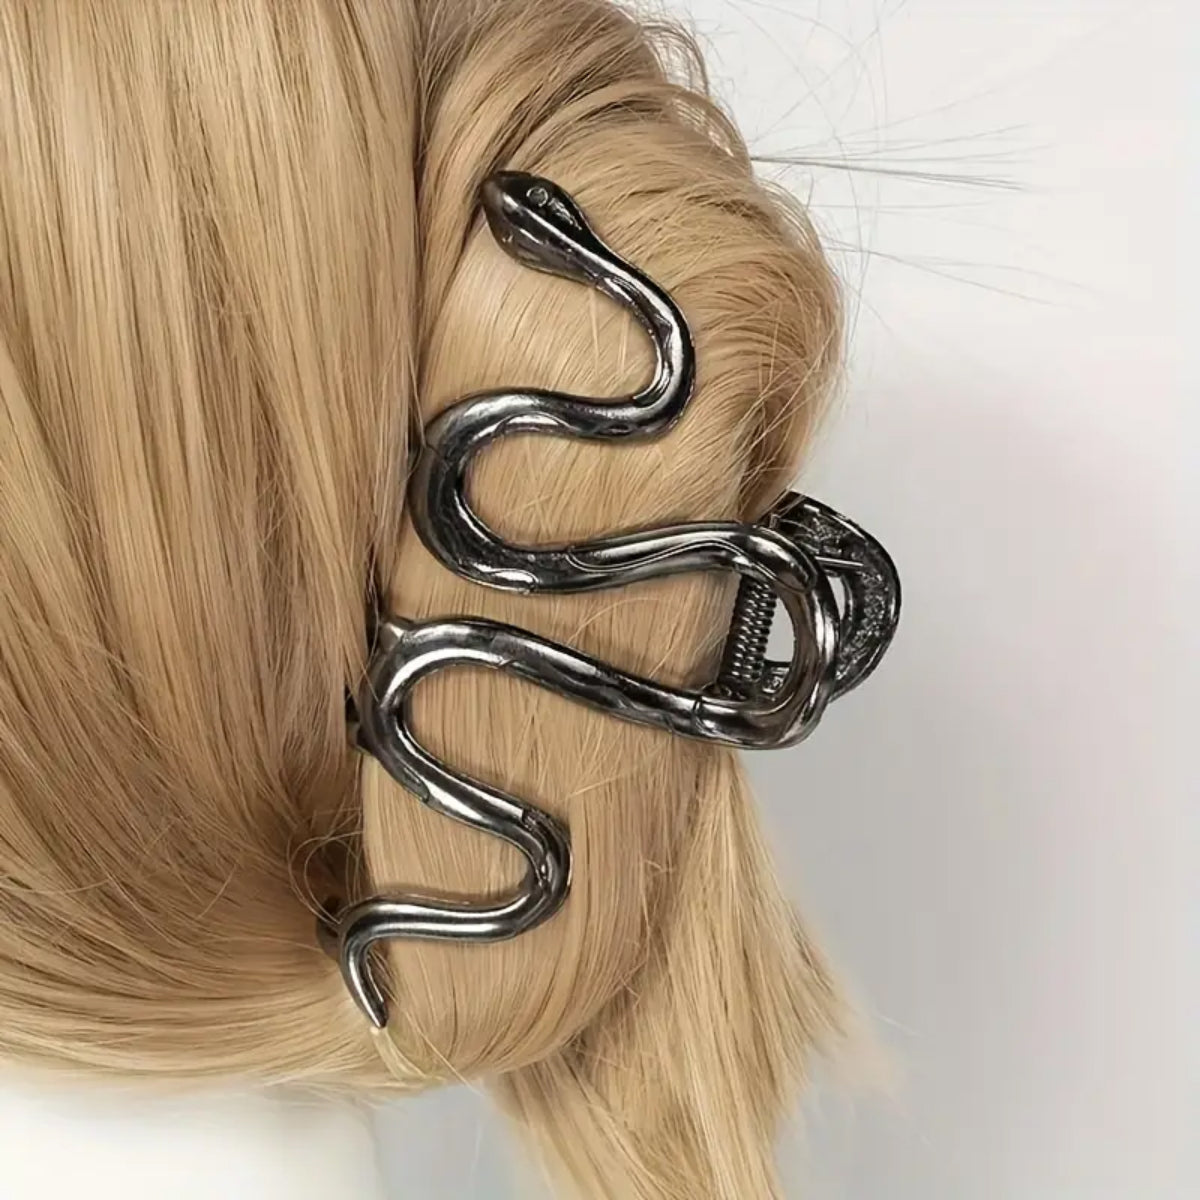 Ro Rox Gothic Snake Metal Hair Claw Hairclip Dark Silver